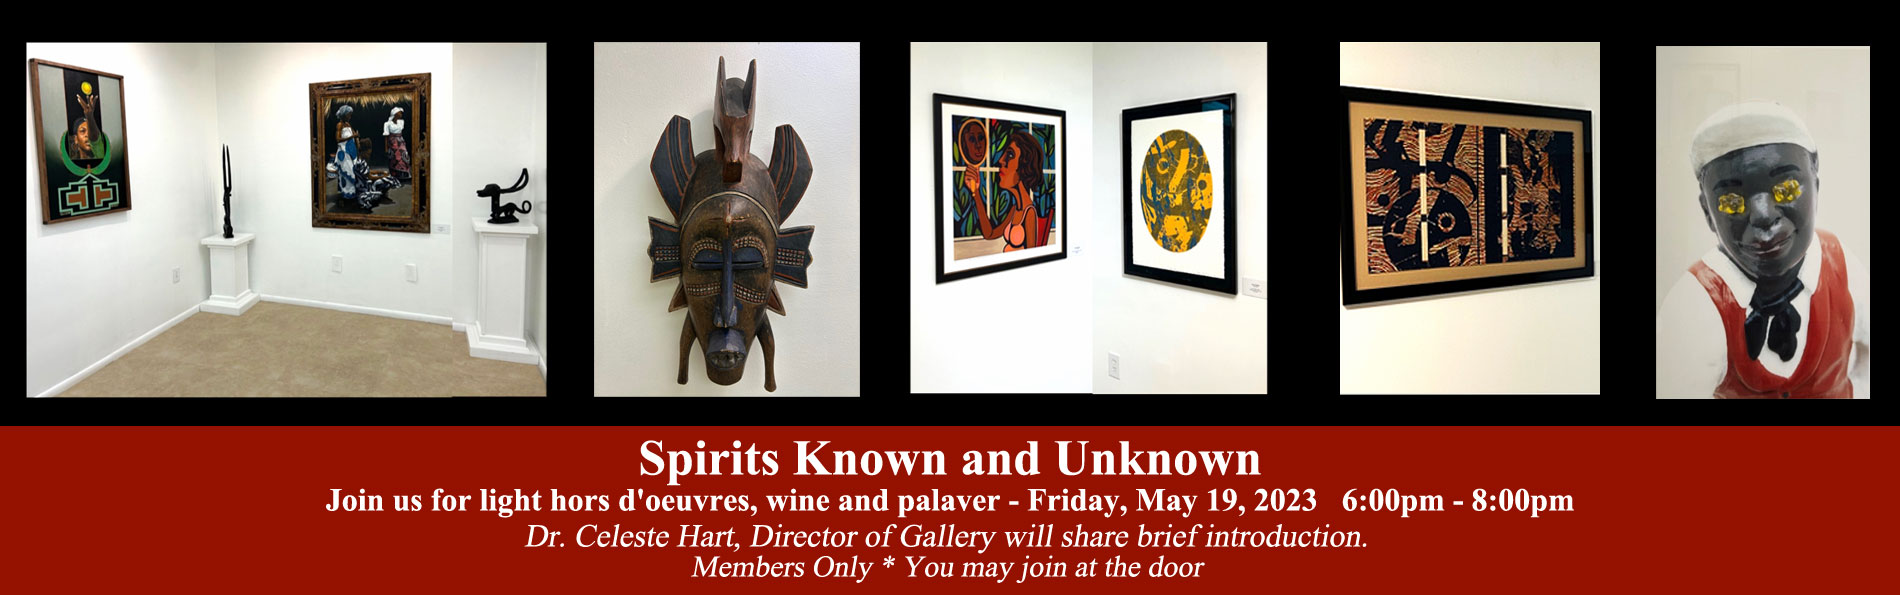 Spirits Known and Unknown exhibit reception